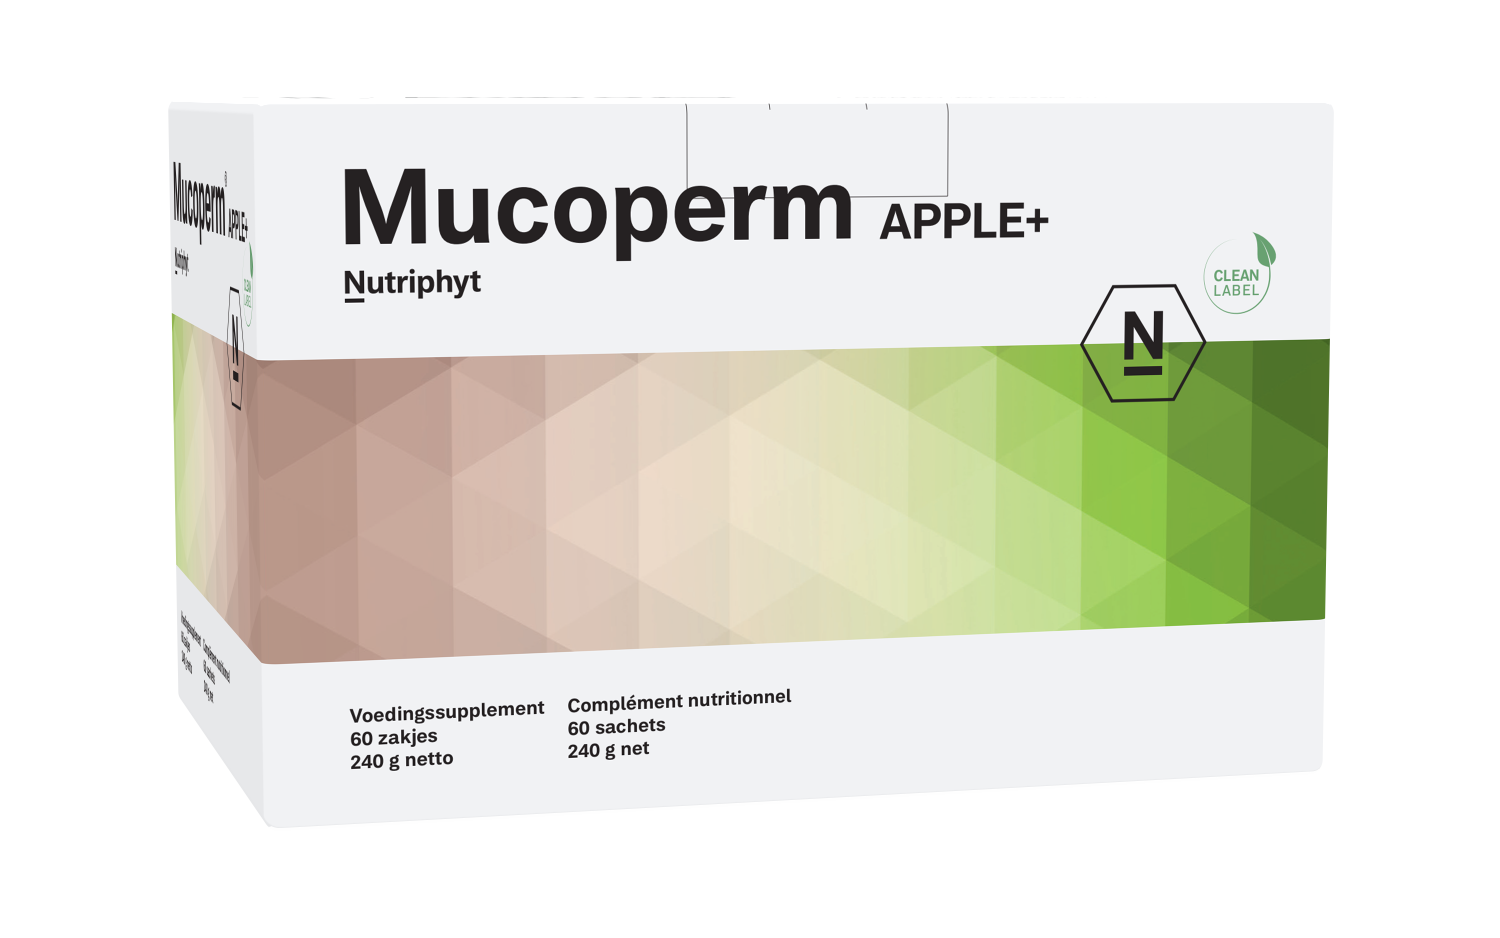 Mucoperm Apple+